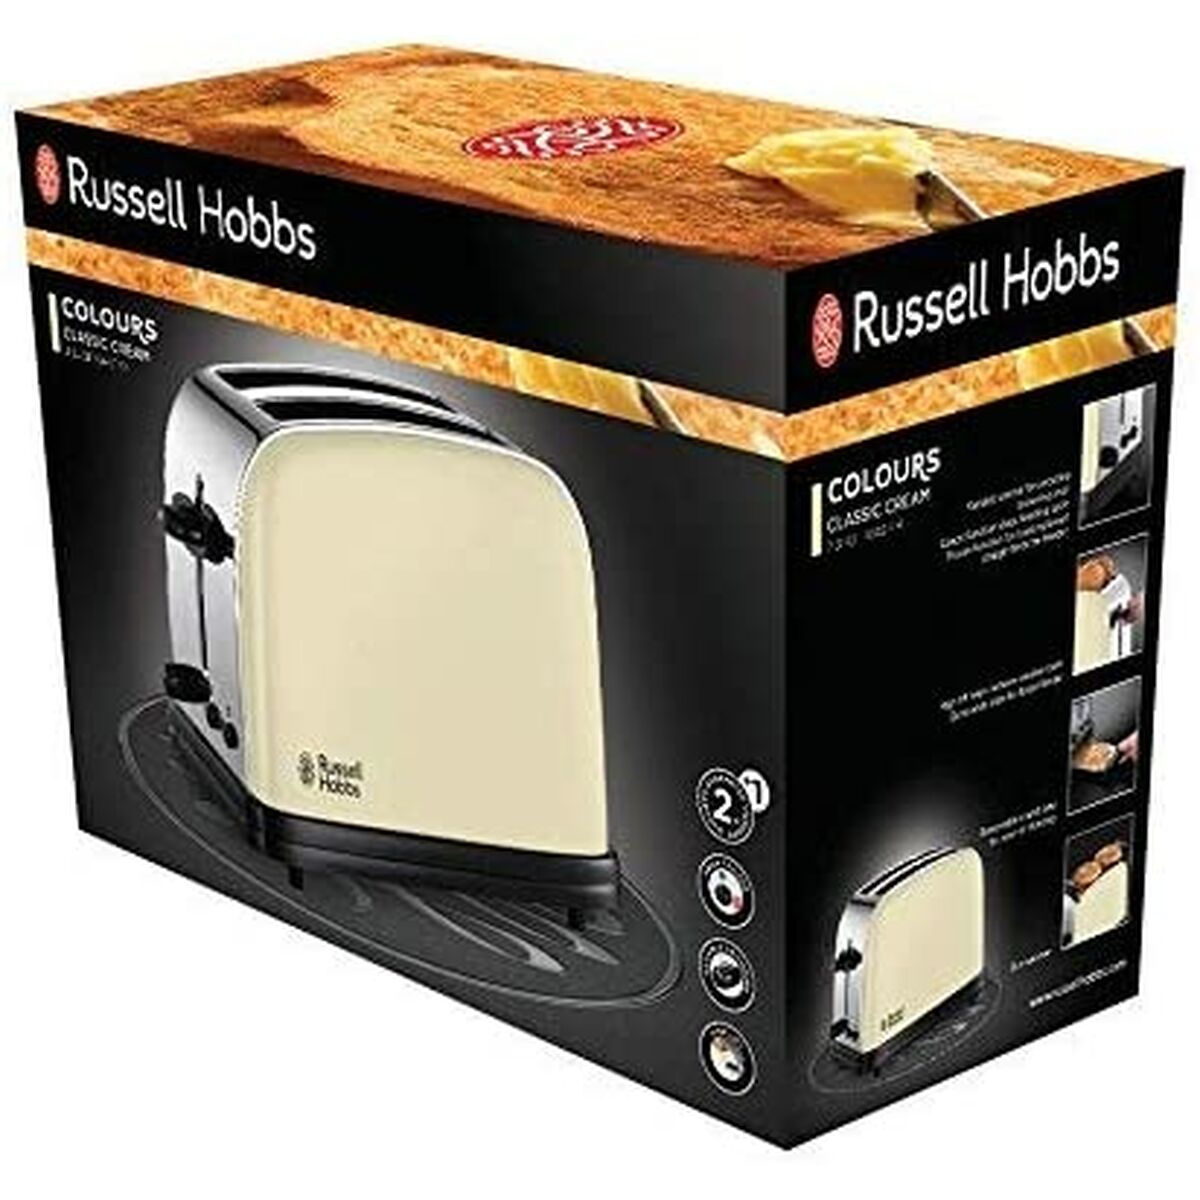 Toaster Russell Hobbs 23334-56 Creme 1100 W - CA International  